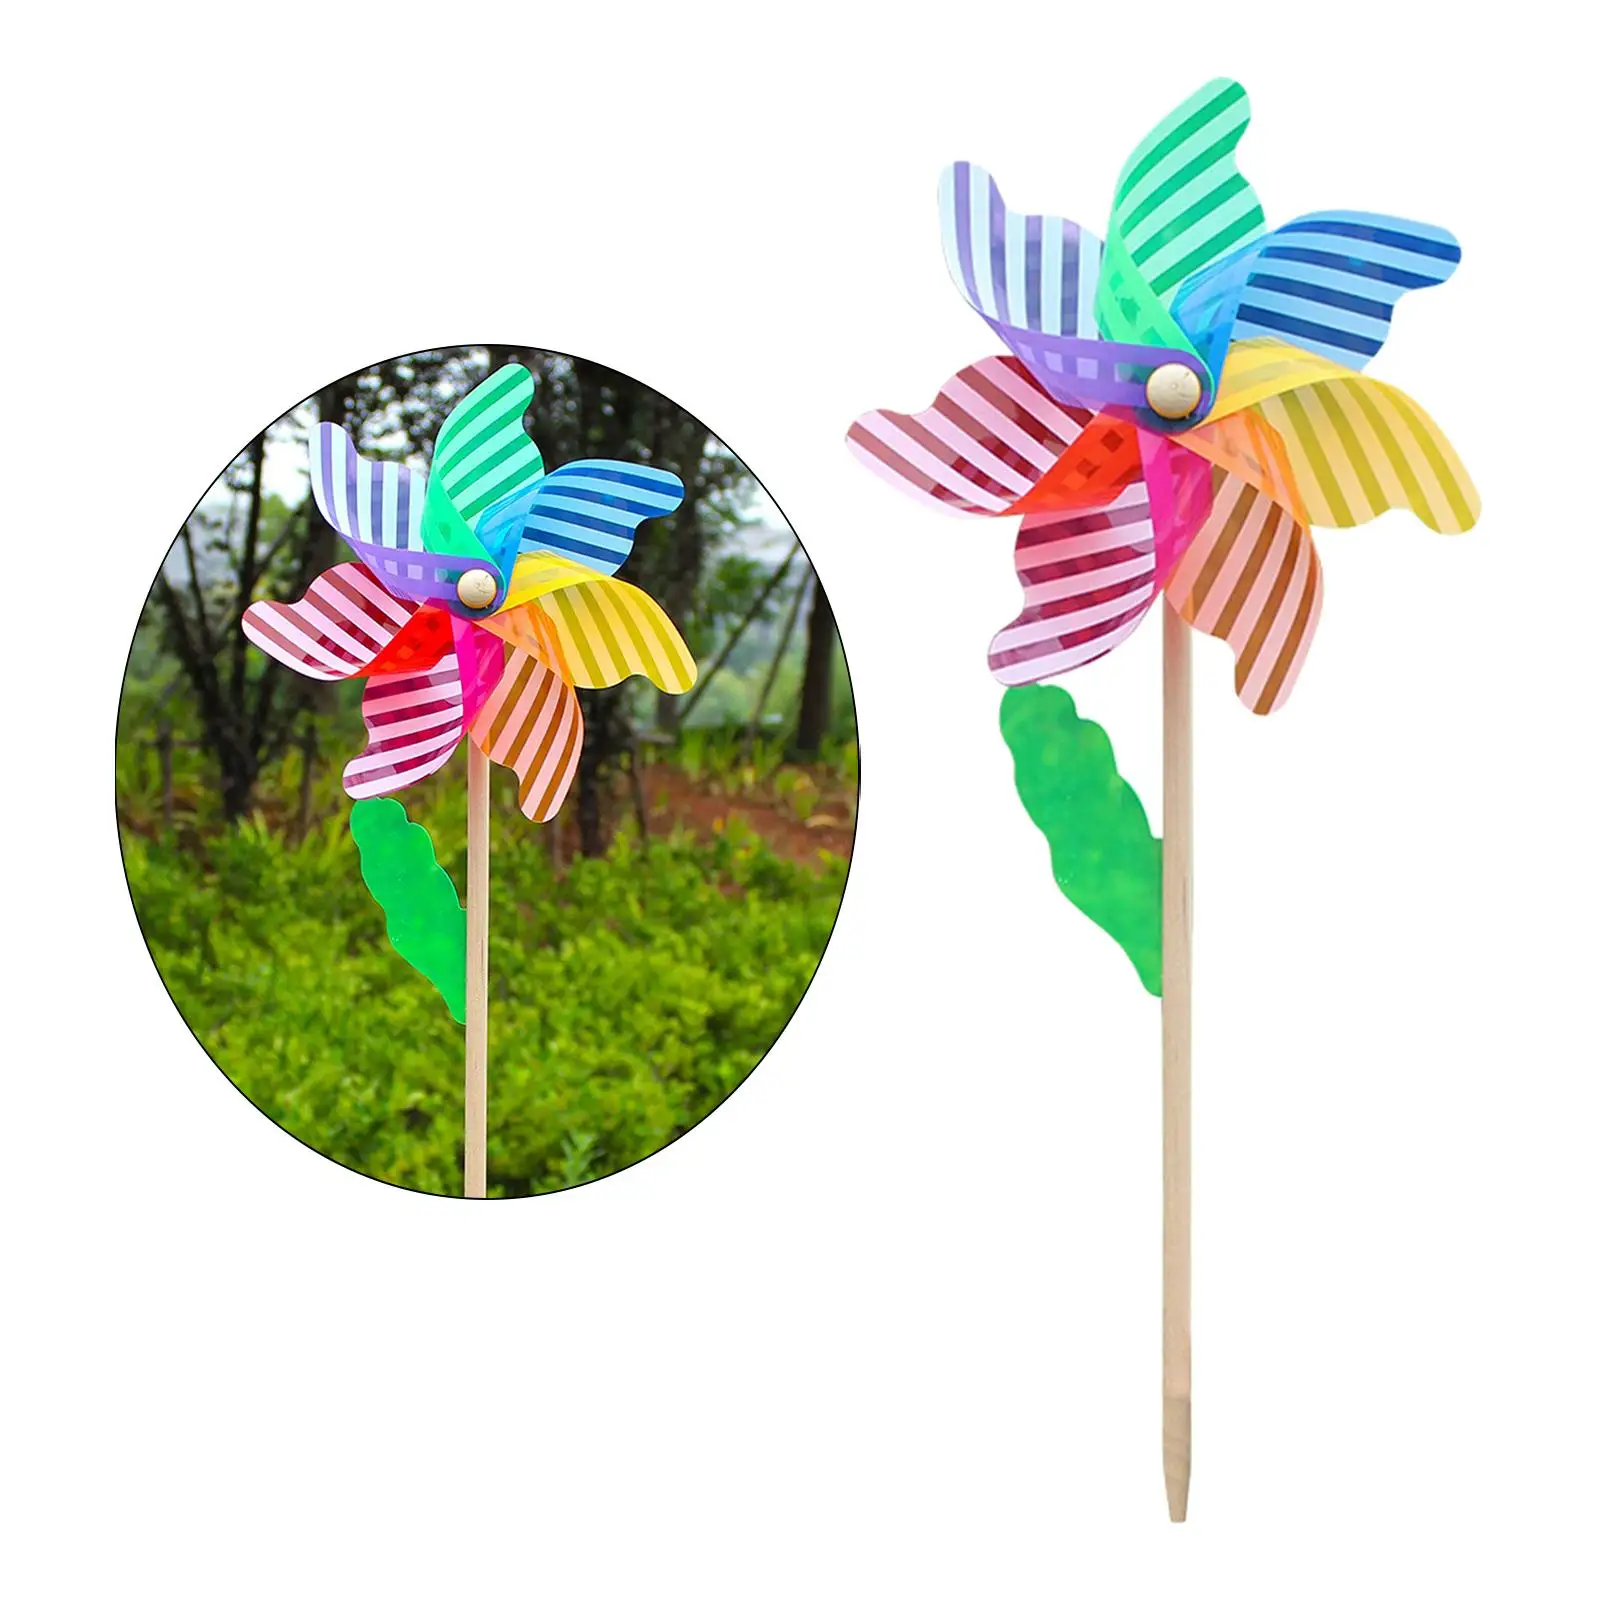 Rainbow Pinwheels with wooden Pole Outdoor Gardening Windmill Kids Toy